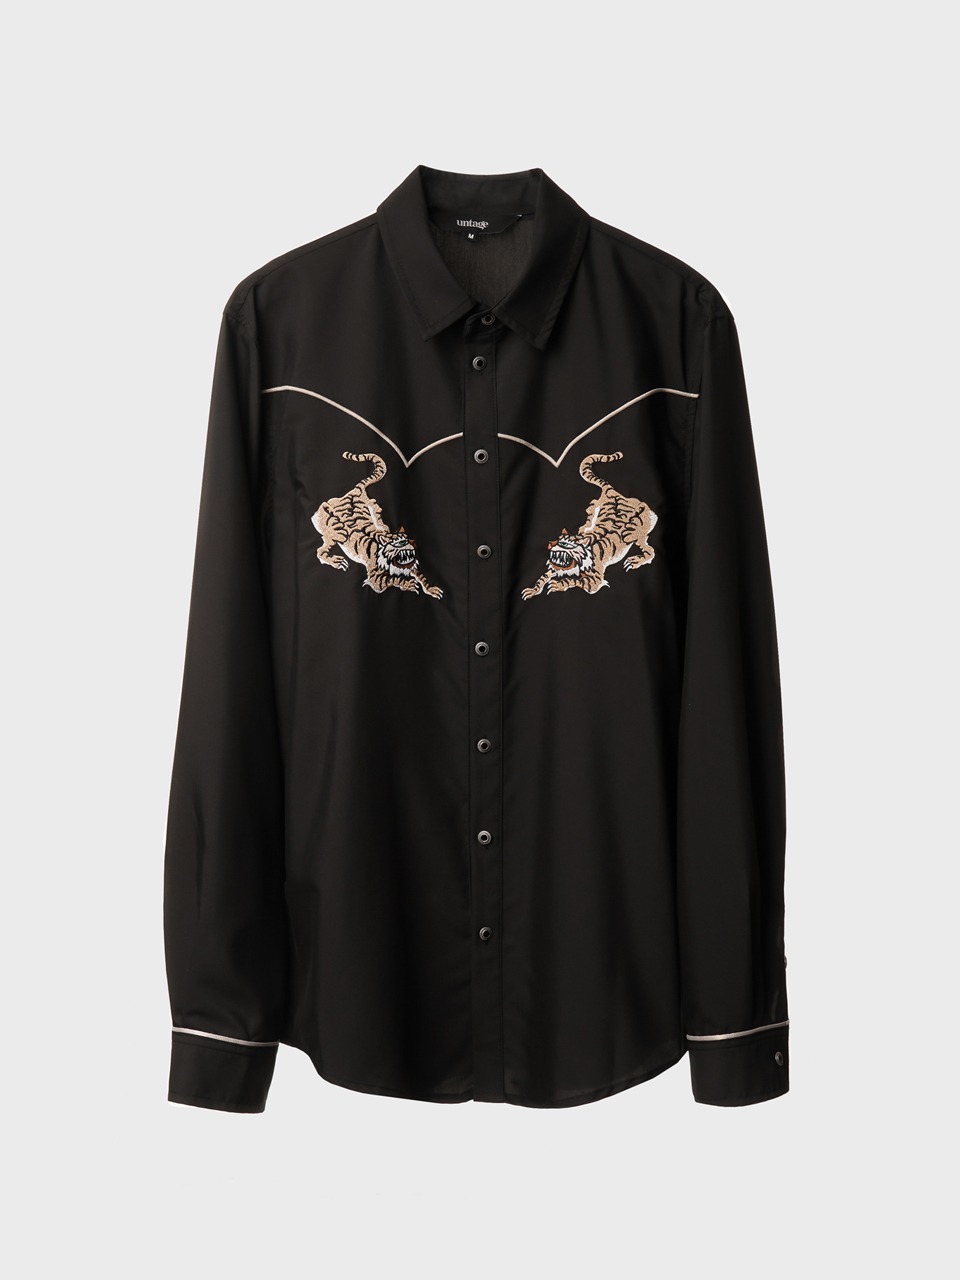 Tiger-Embroidered Western shirt (black)